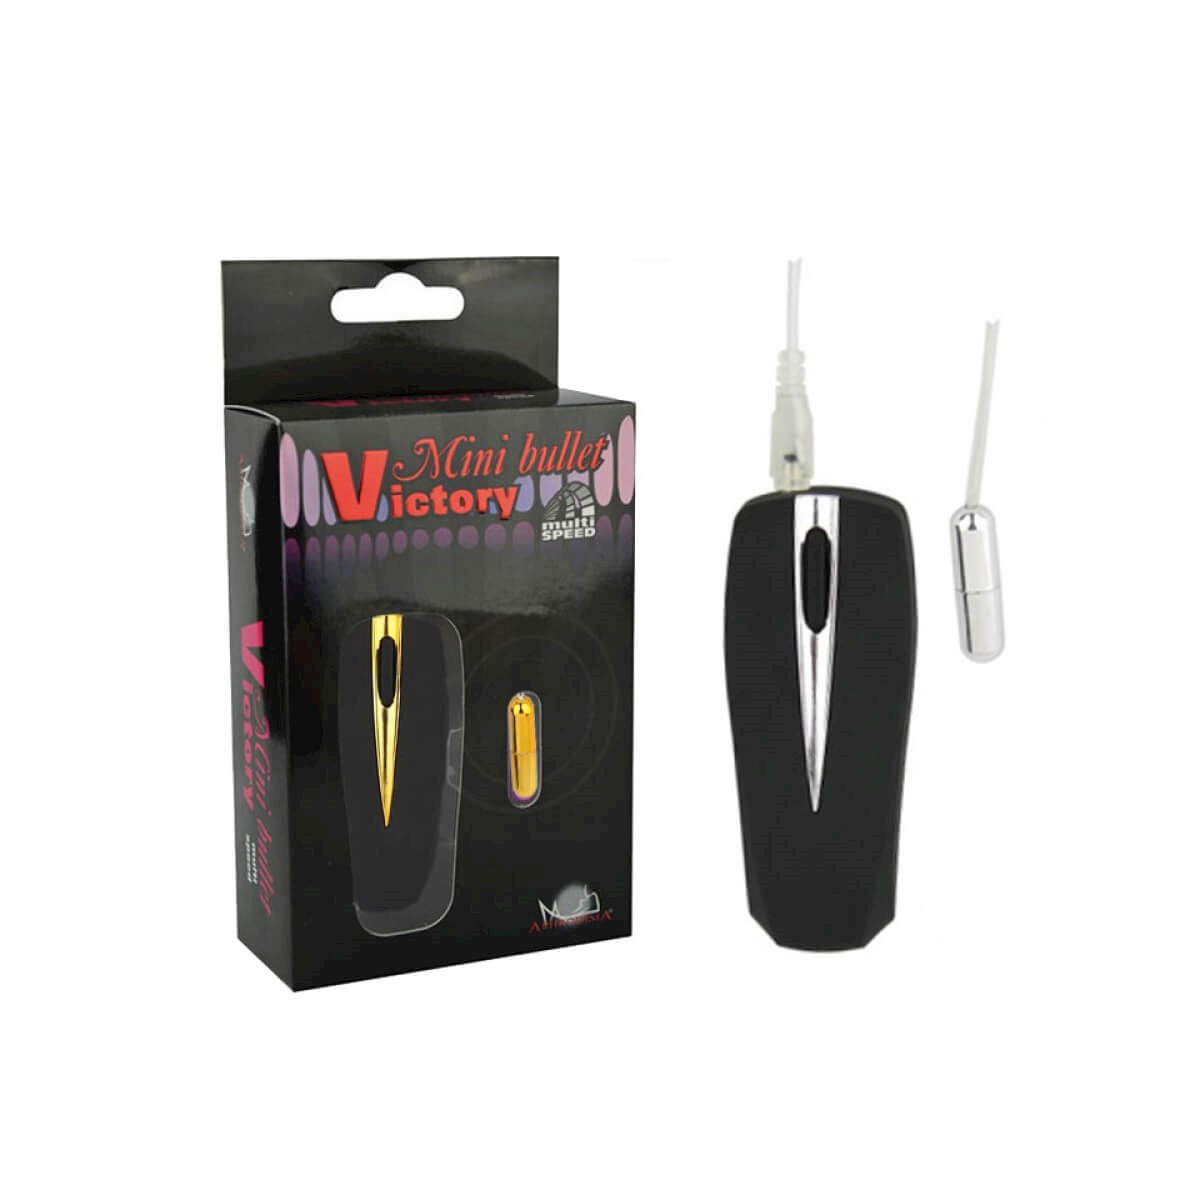 Micro Cápsula Vibratória Victory com Multivelocidade e Controle Formato Mouse Miss Collection